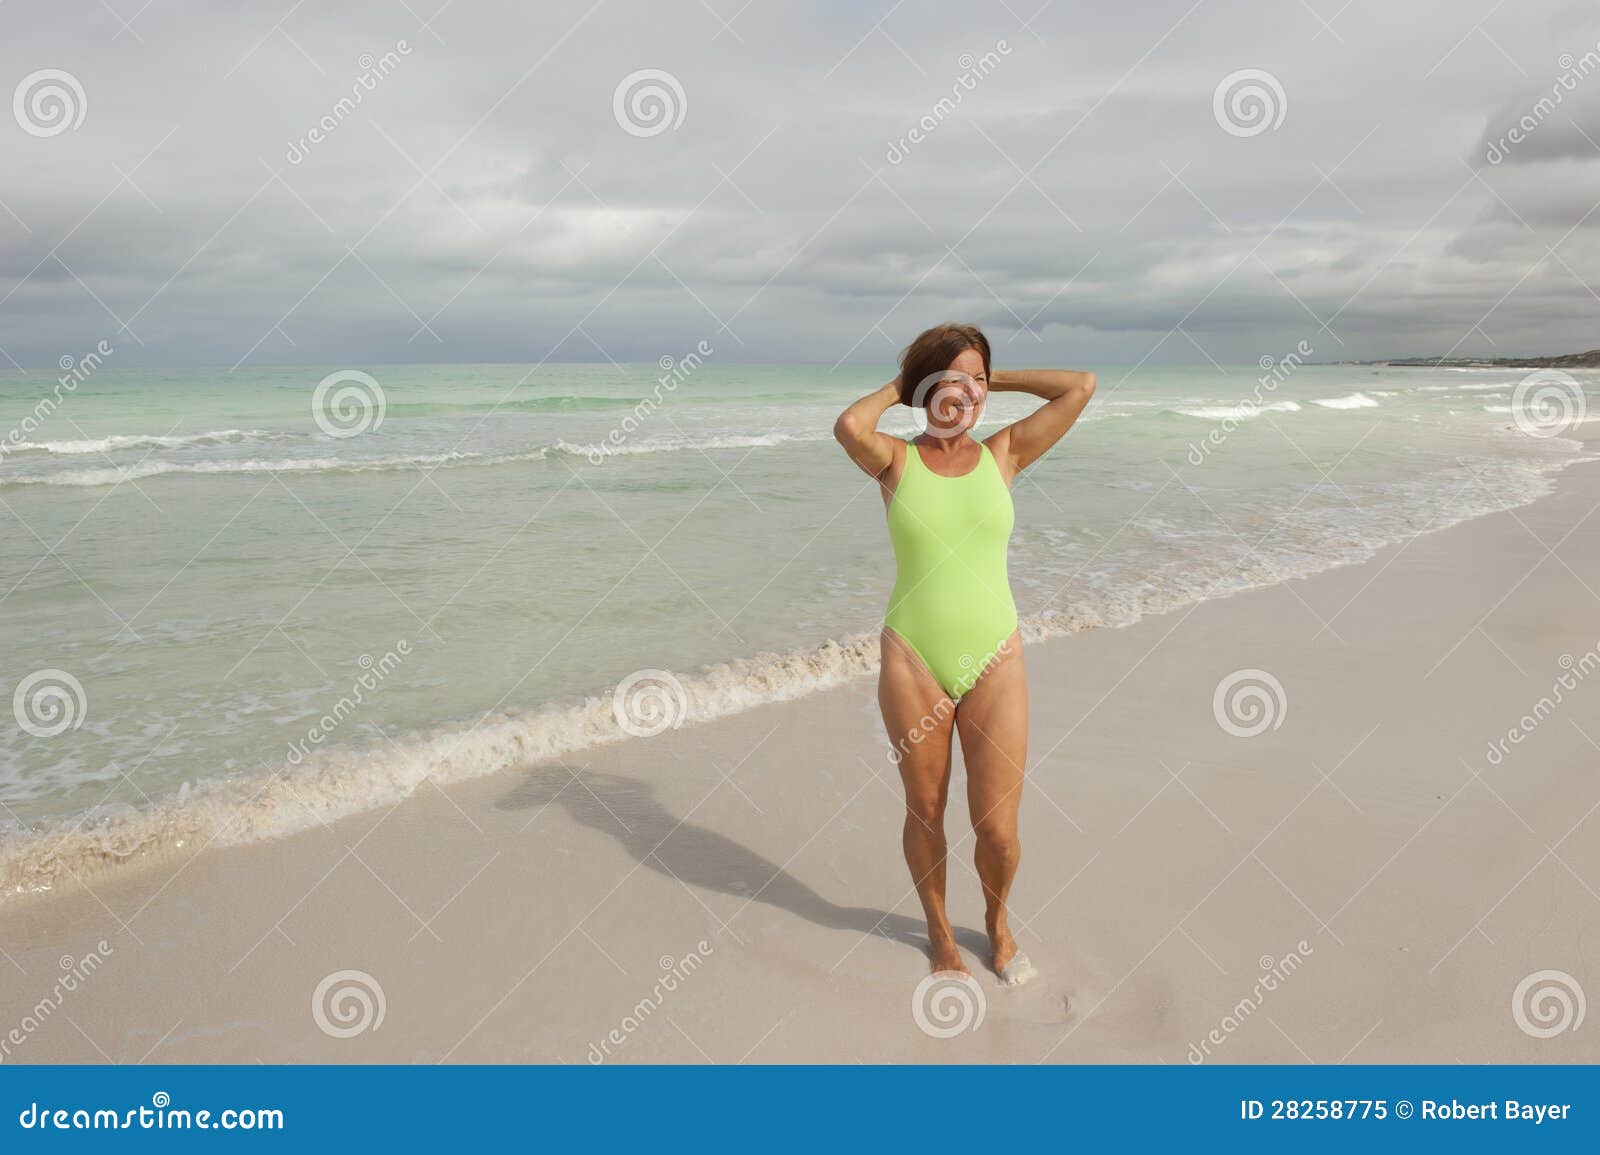 732,493 Woman Beach Stock Photos pic